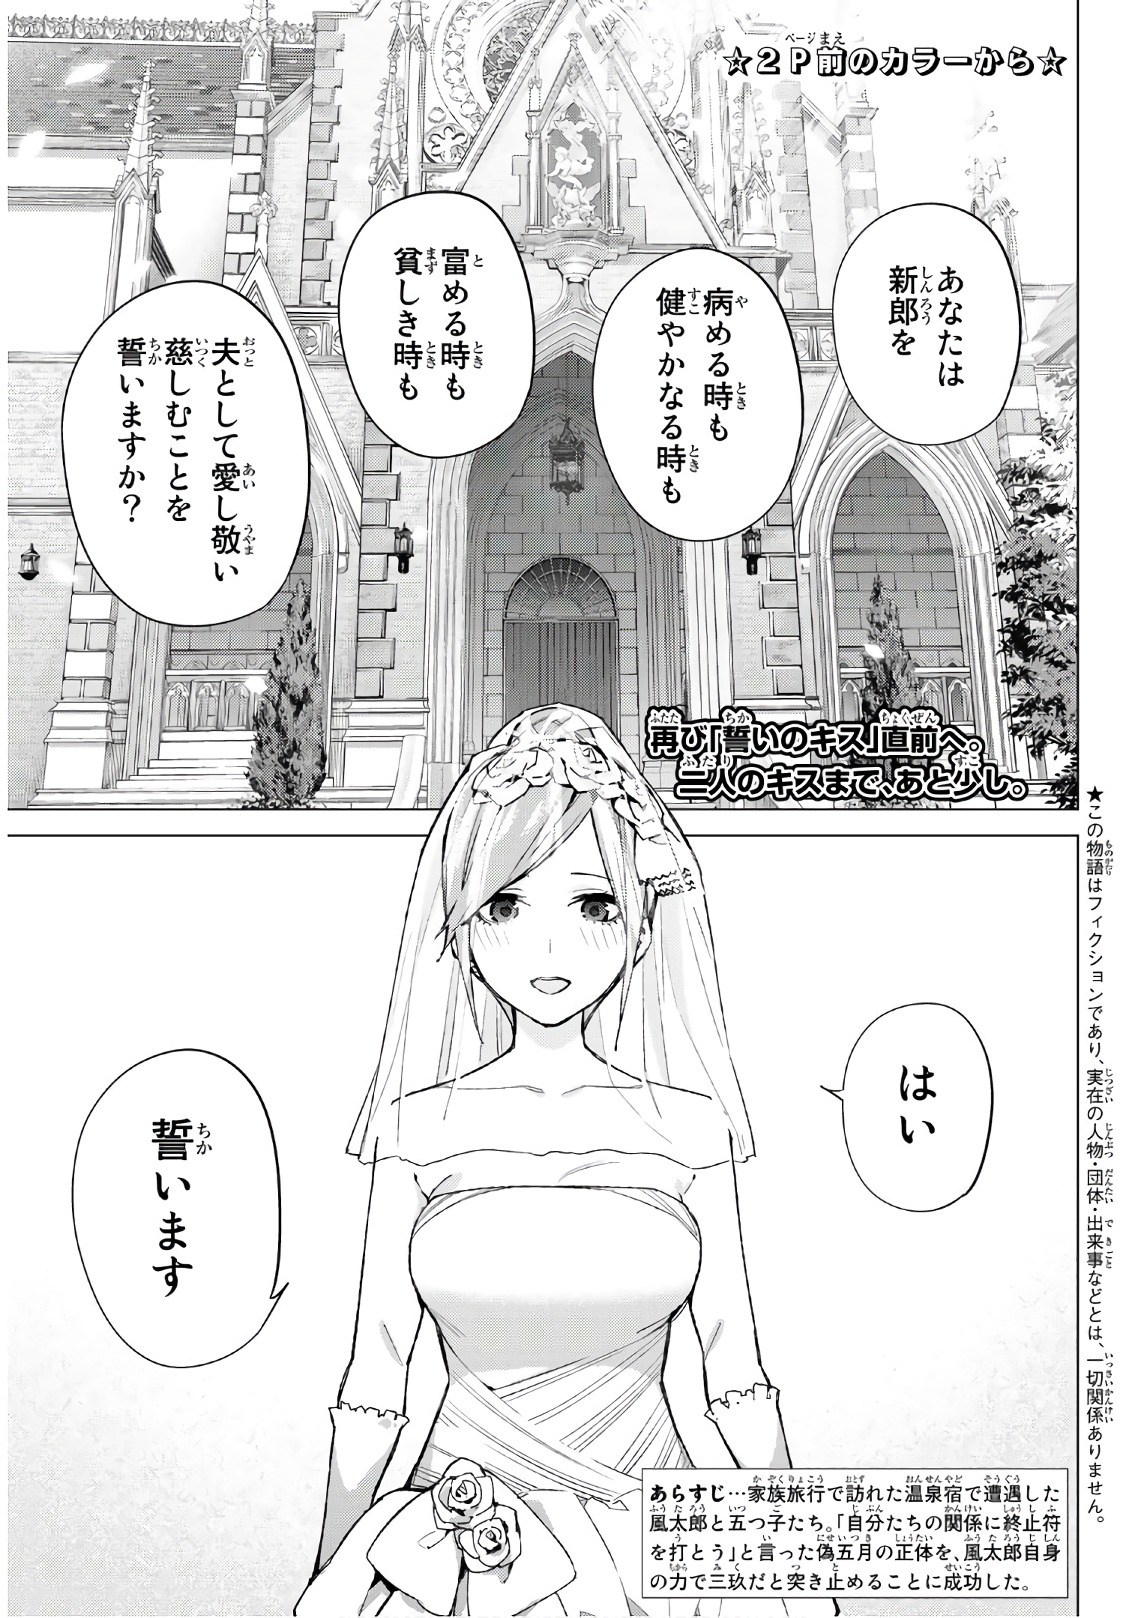 My one true ending: 5-Toubun no Hanayome OVA: 5 Equal Wives :  r/5ToubunNoHanayome